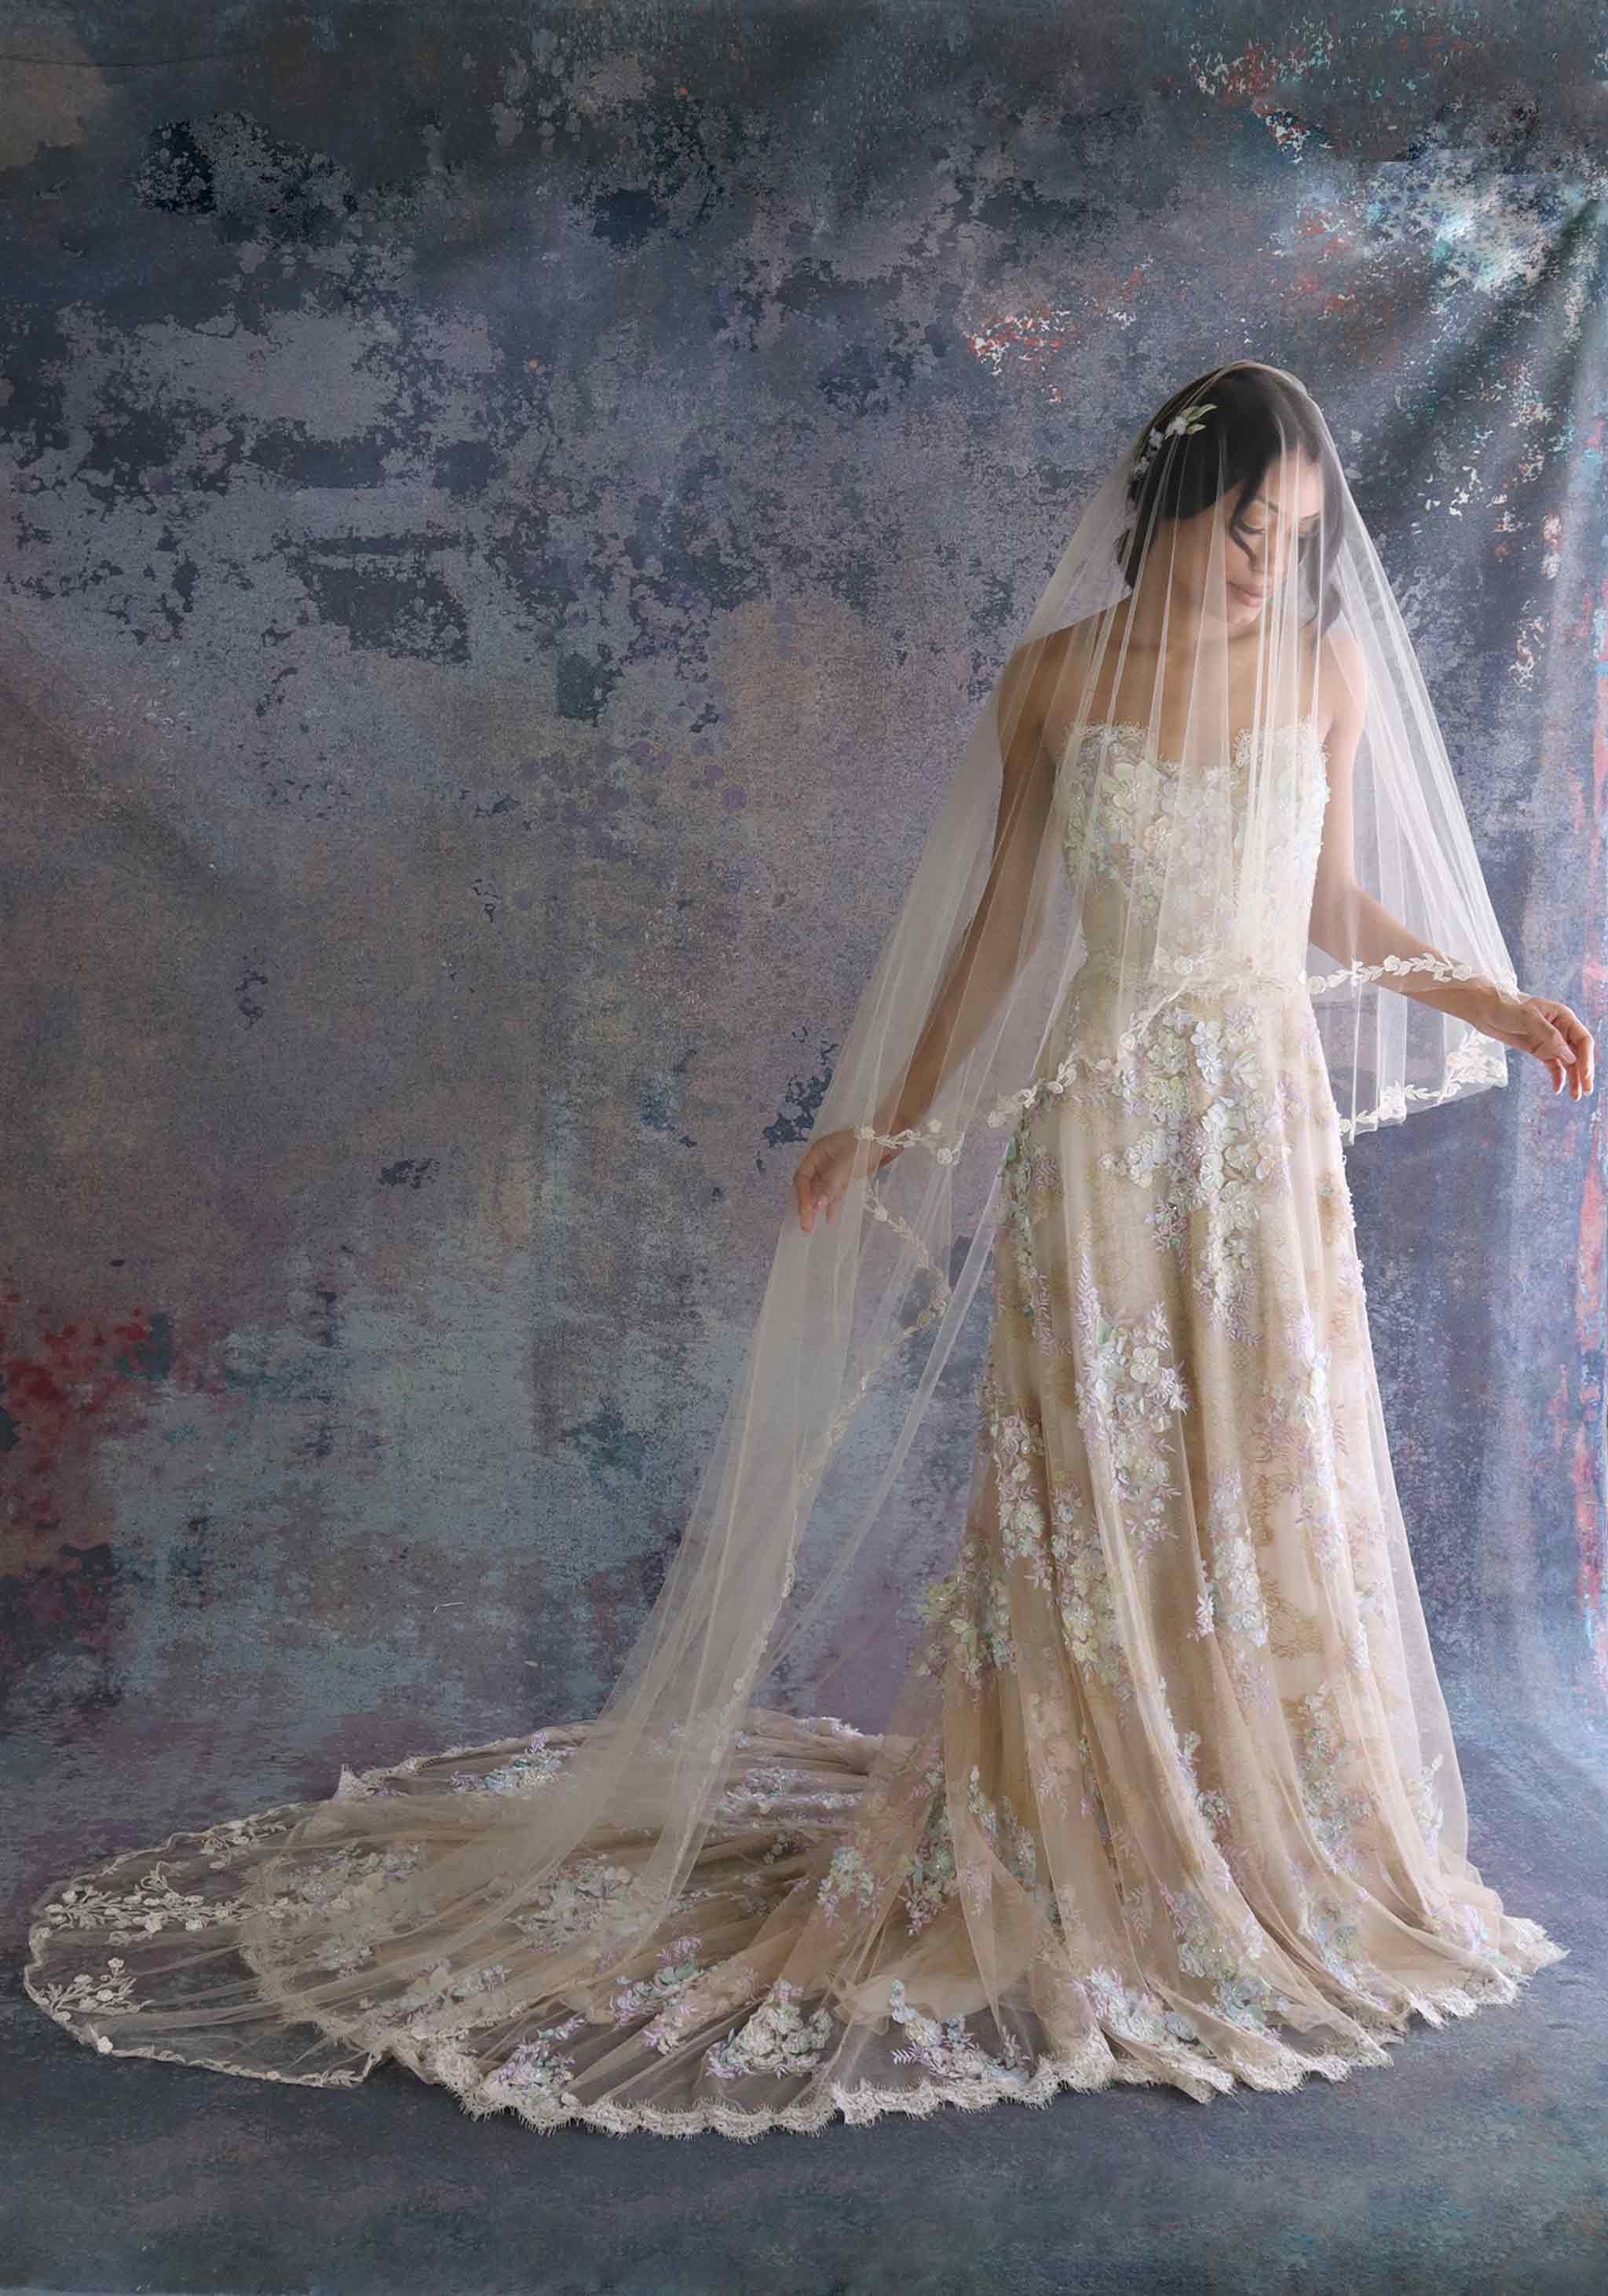 Kew Gardens Wedding｜Rosa Clara Bridal Gown & Mantilla Veil